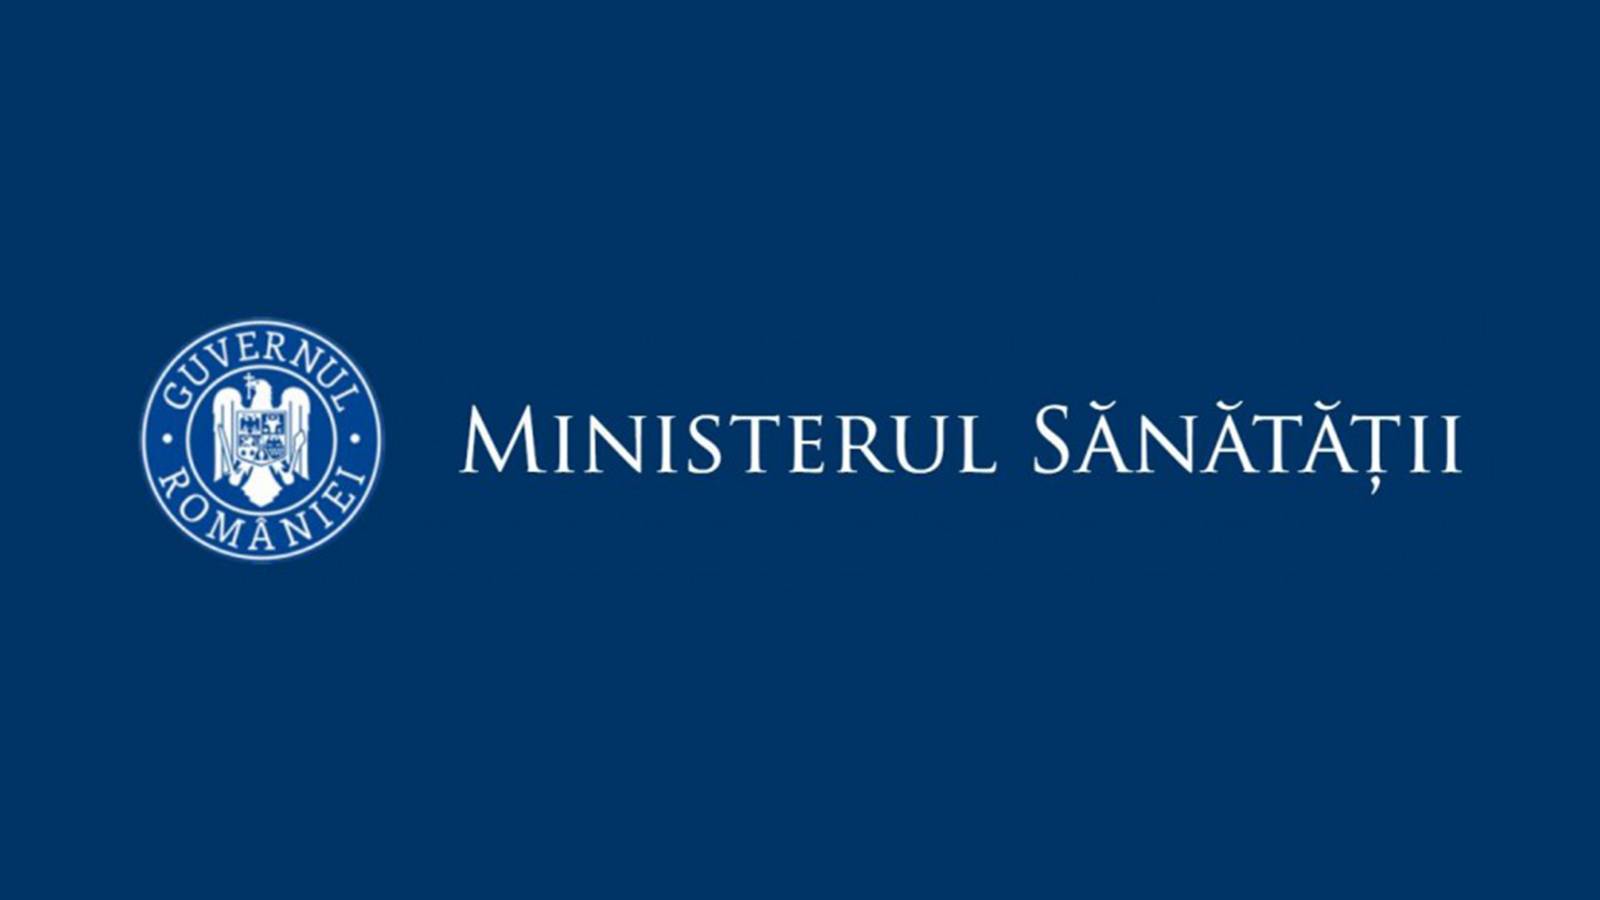 Ministerul Sanatatii Situatia GRAVA a Pandemiei Coronavirus Romania